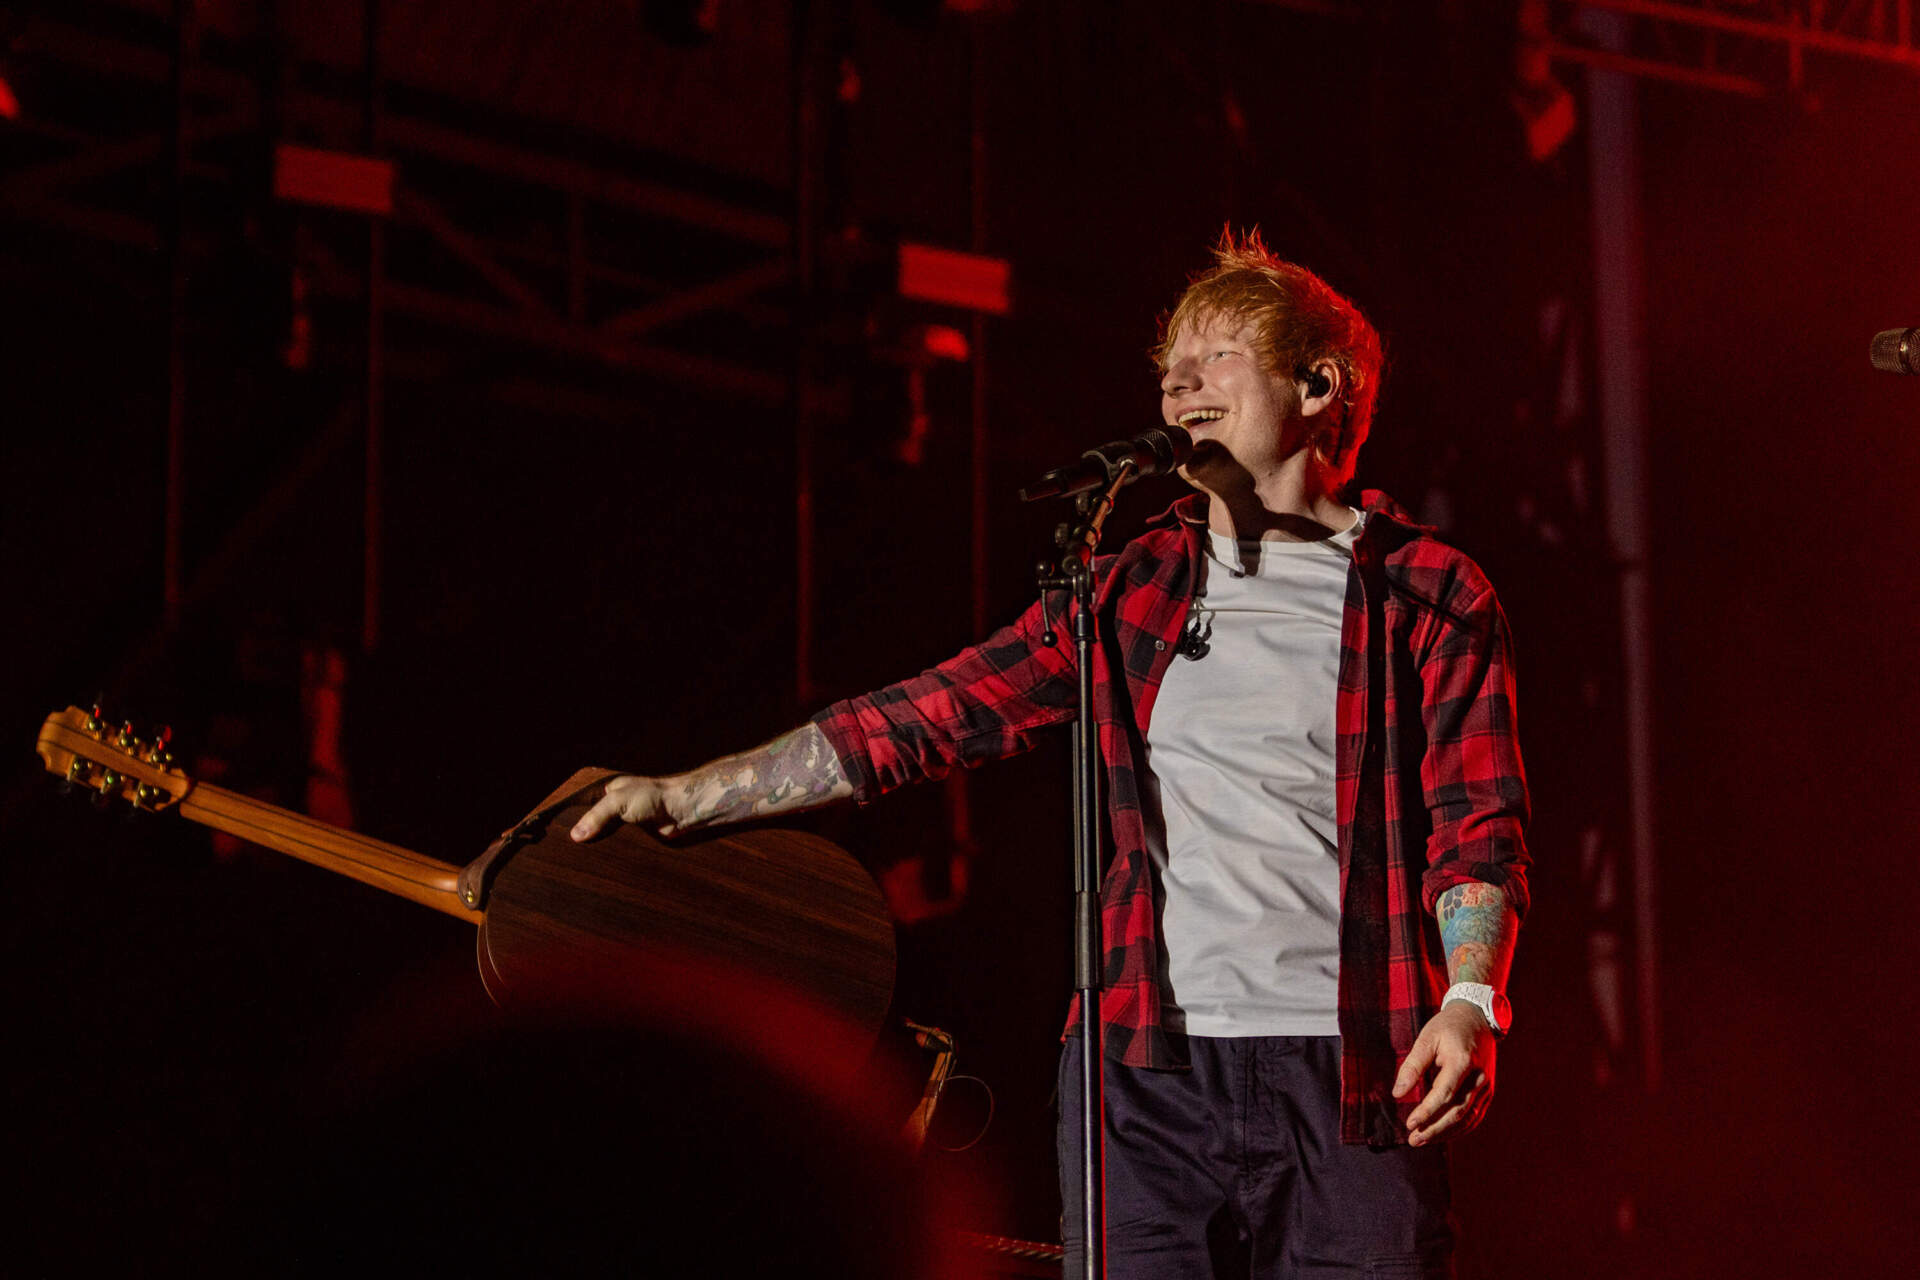 Friday night headliner Ed Sheeran greets the crowd. (Jesse Costa/WBUR)